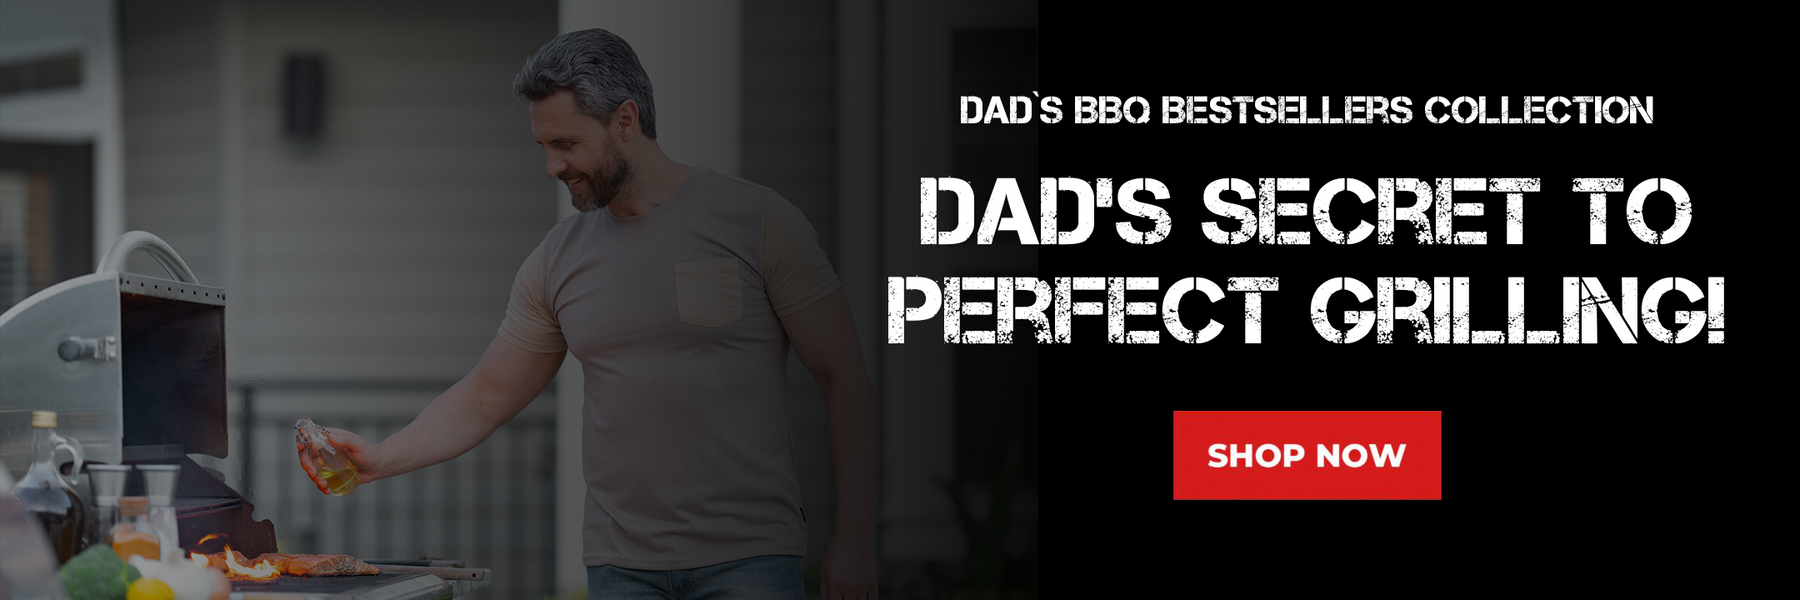 Dad`s BBQ Bestsellers